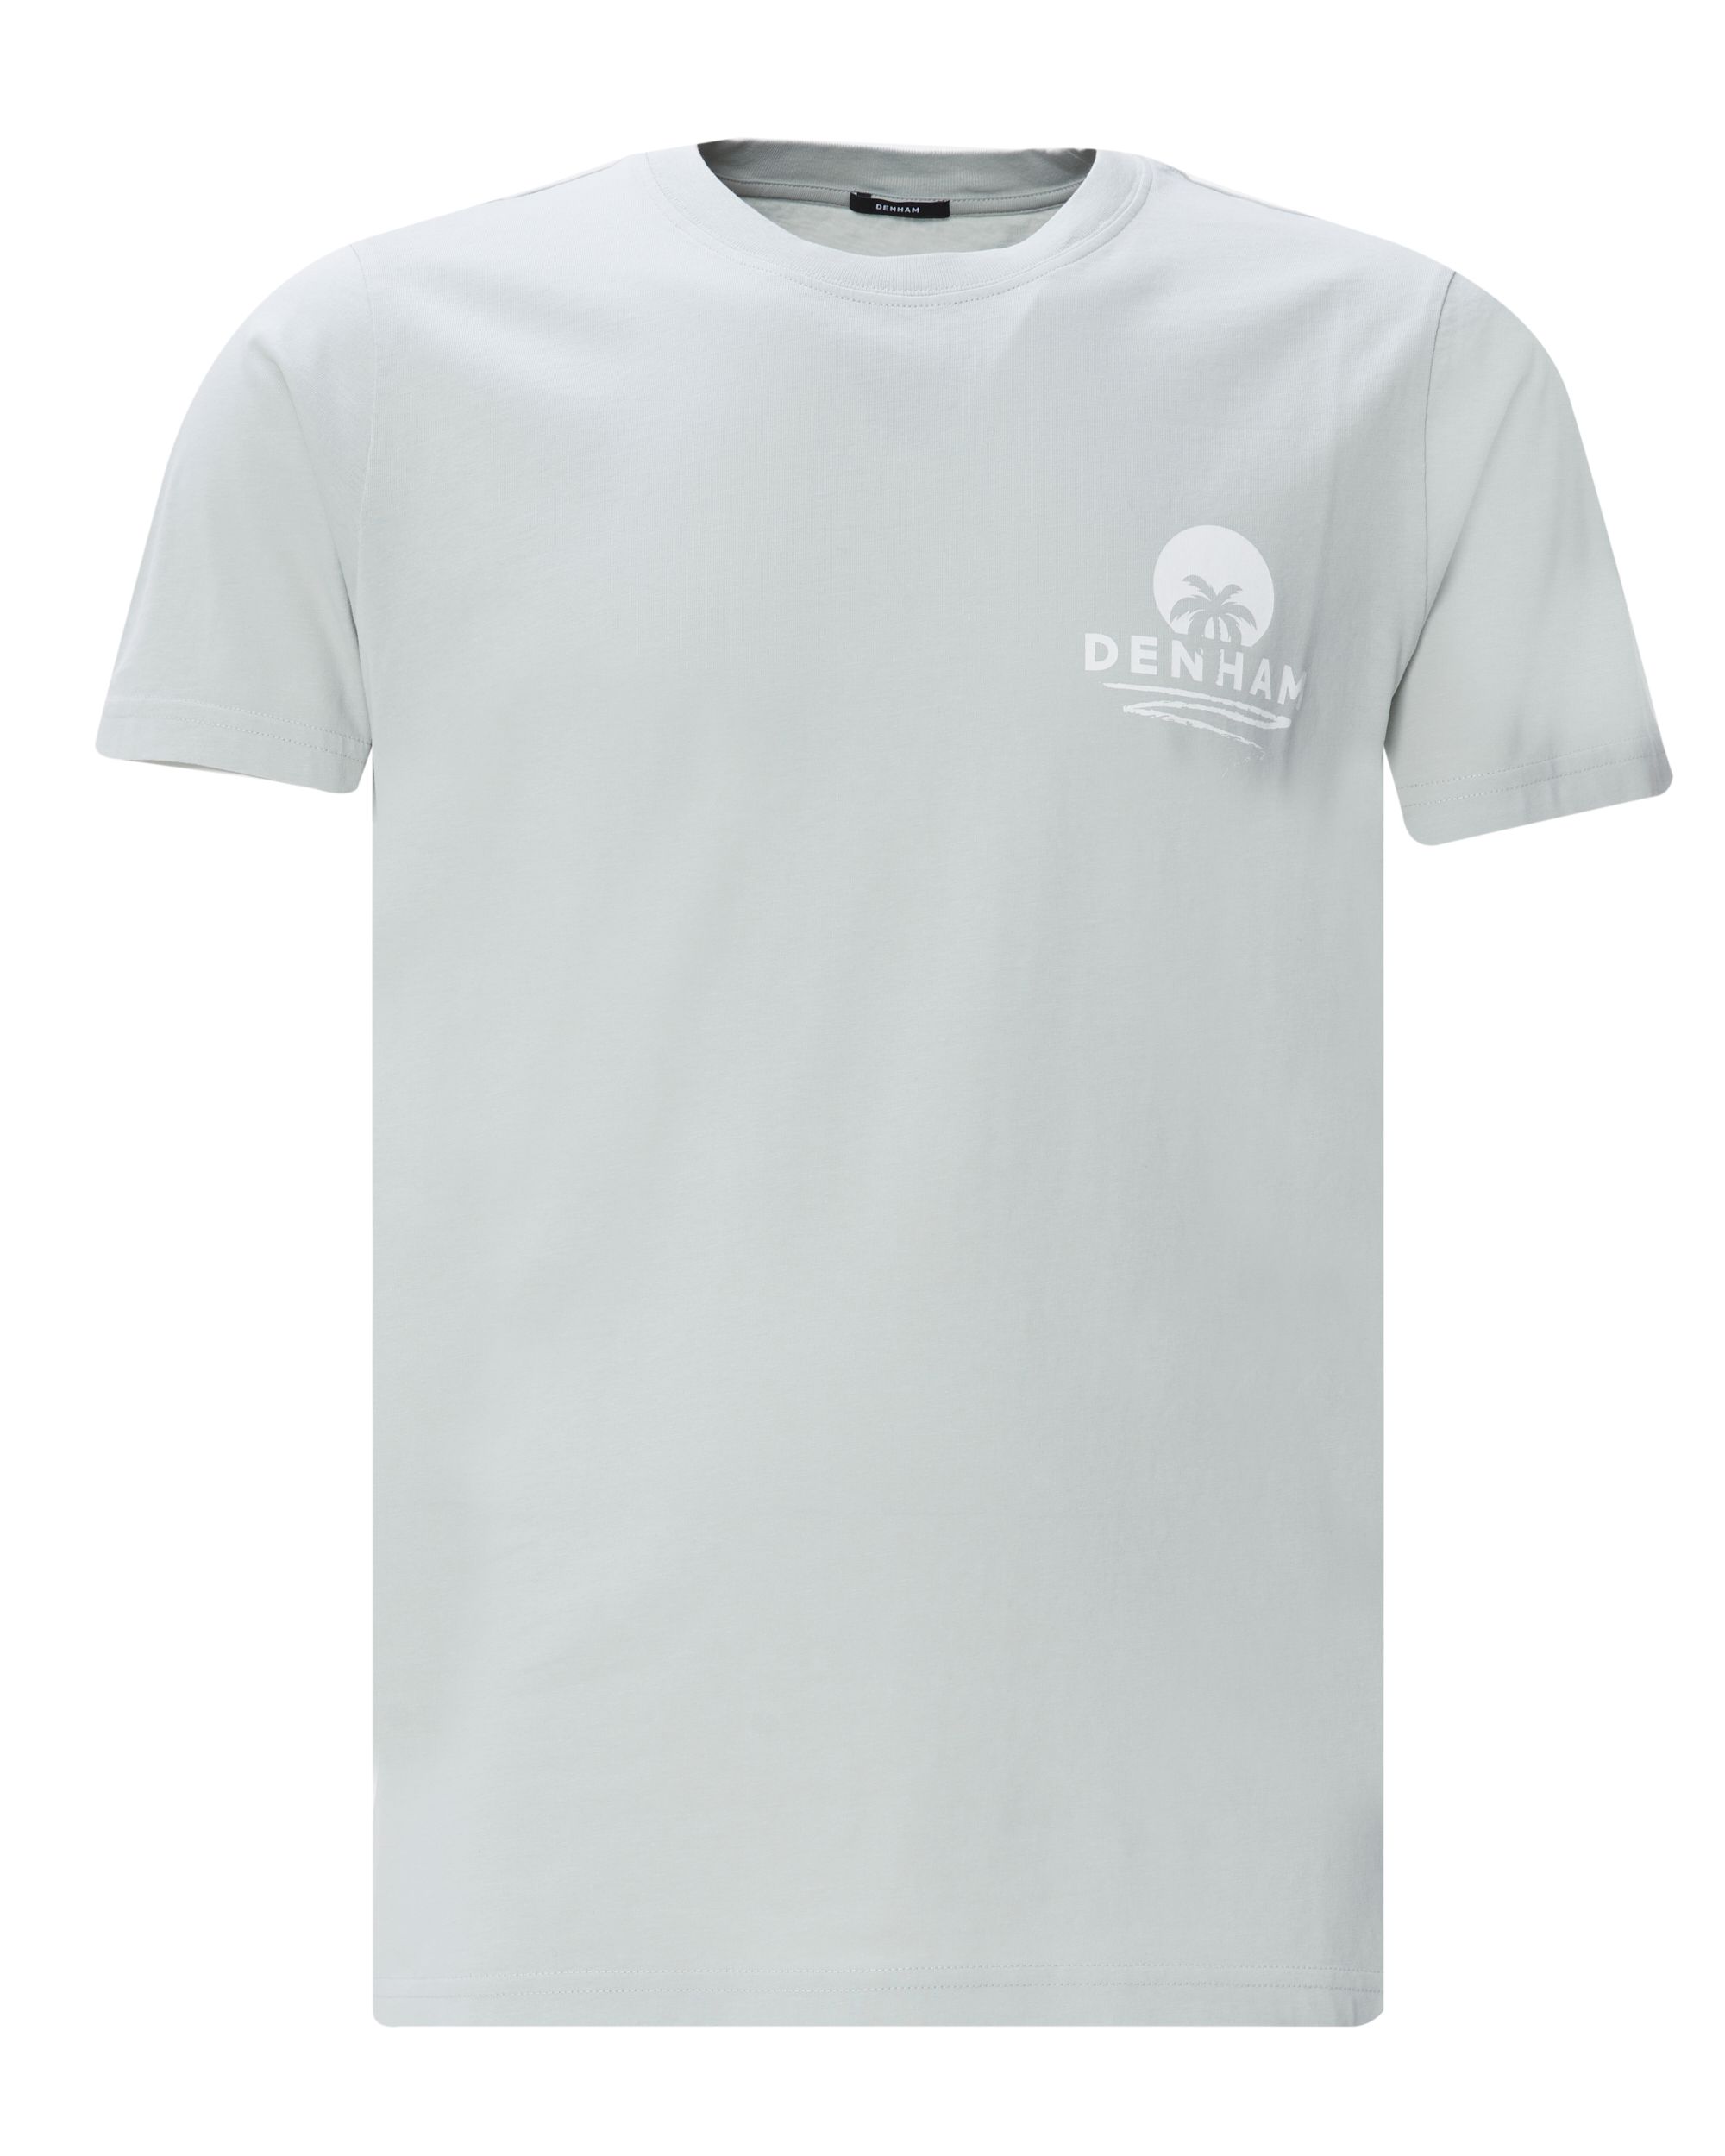 DENHAM Nissi T-shirt KM Licht grijs 081252-001-L